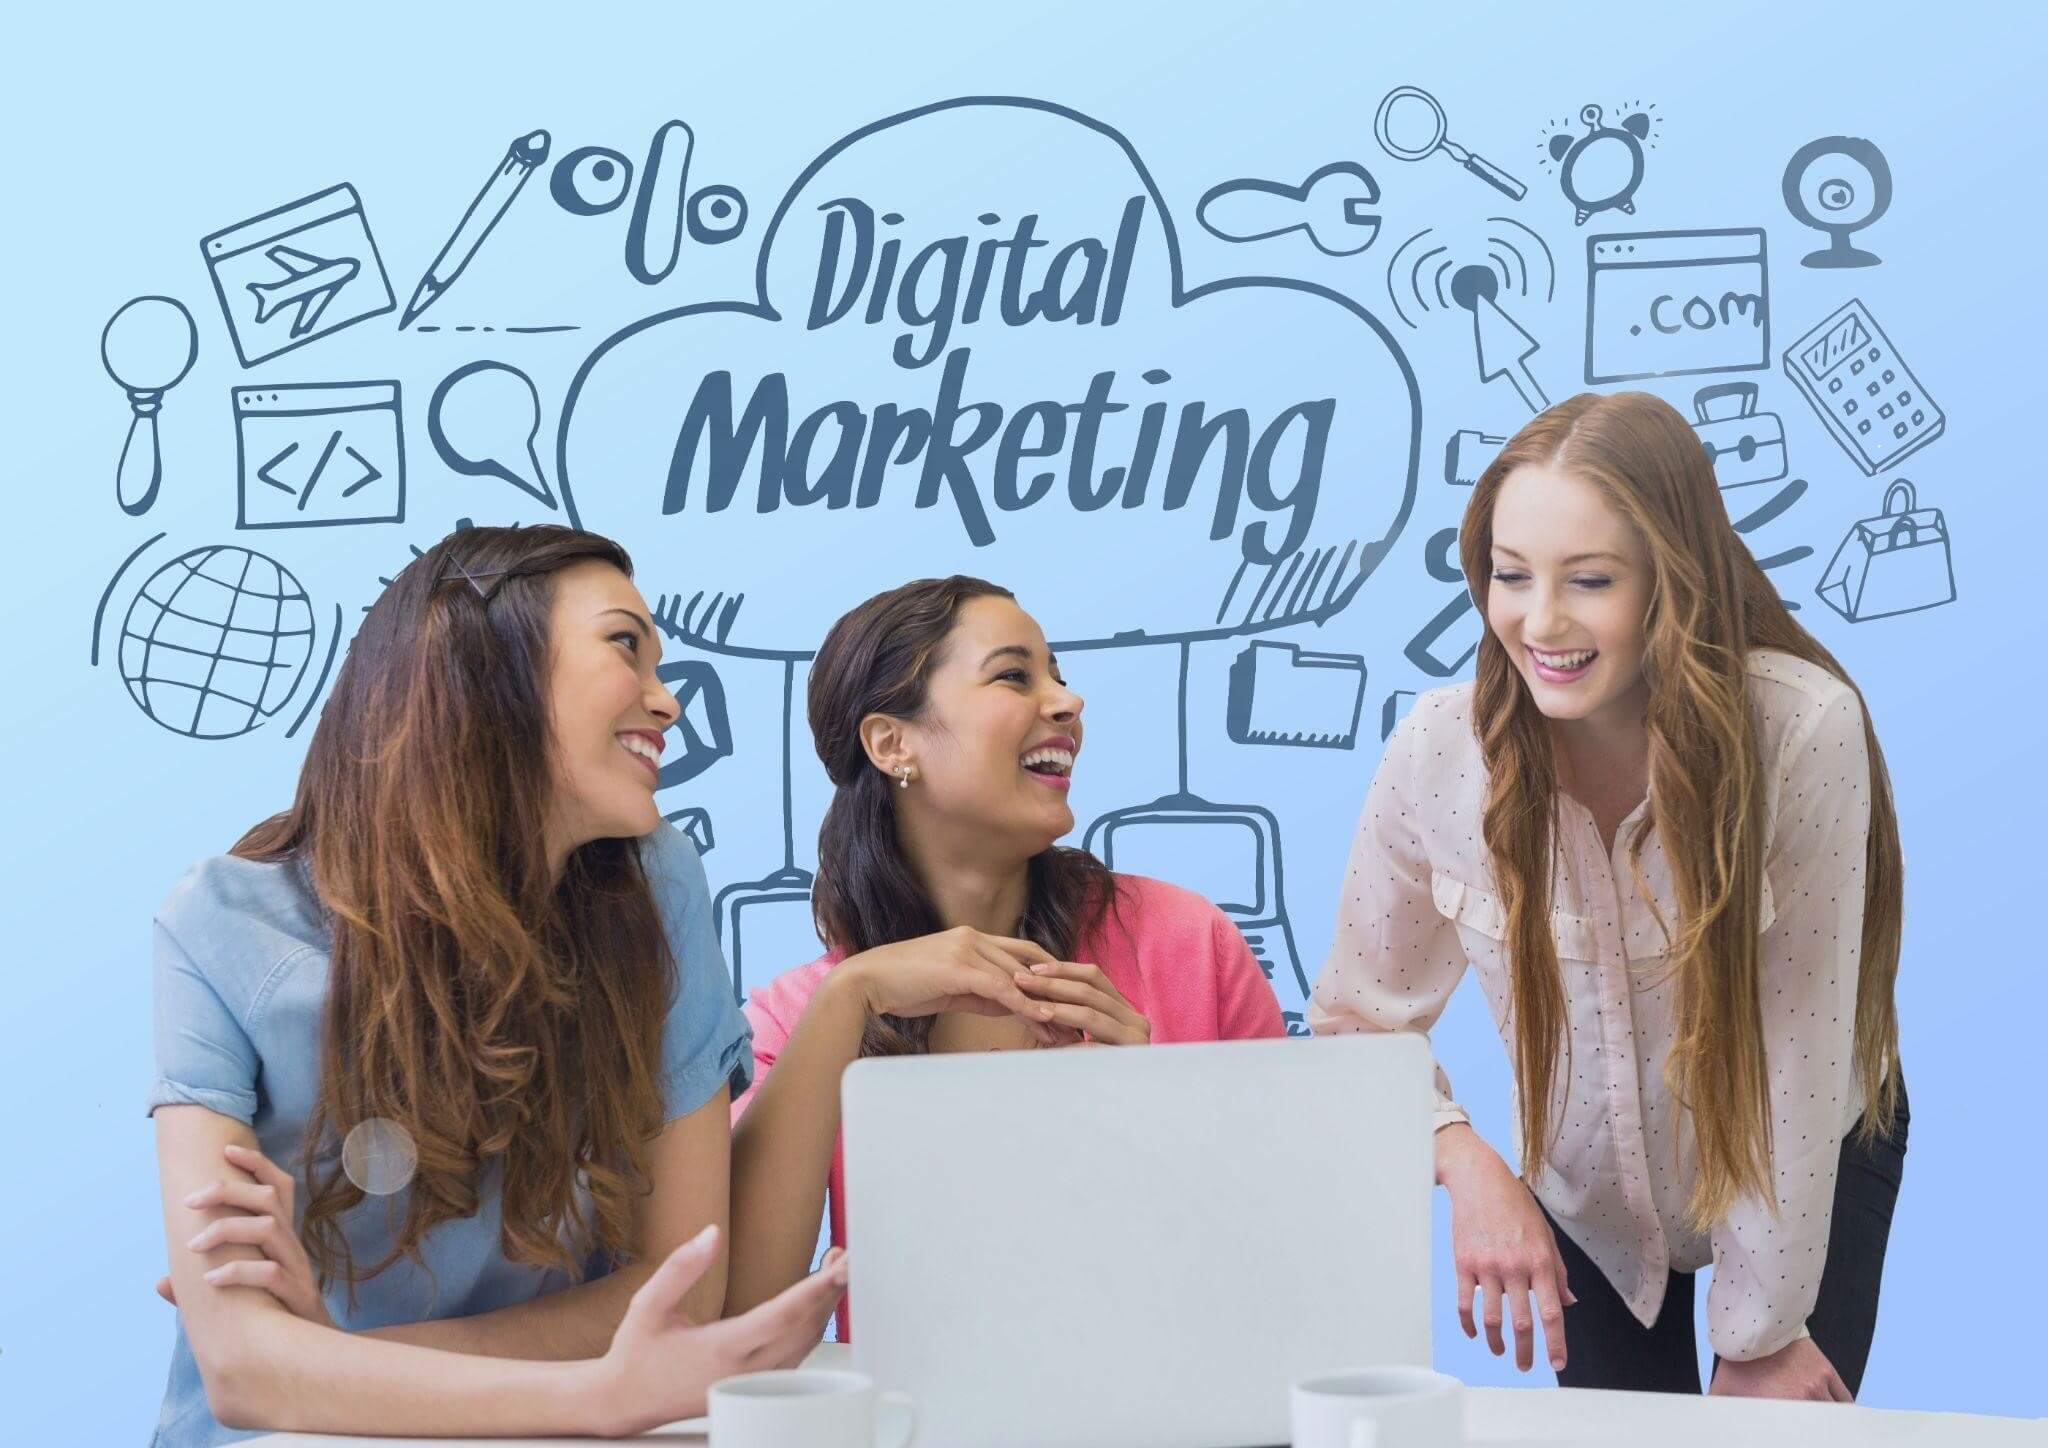 How student can start Digital Marketing